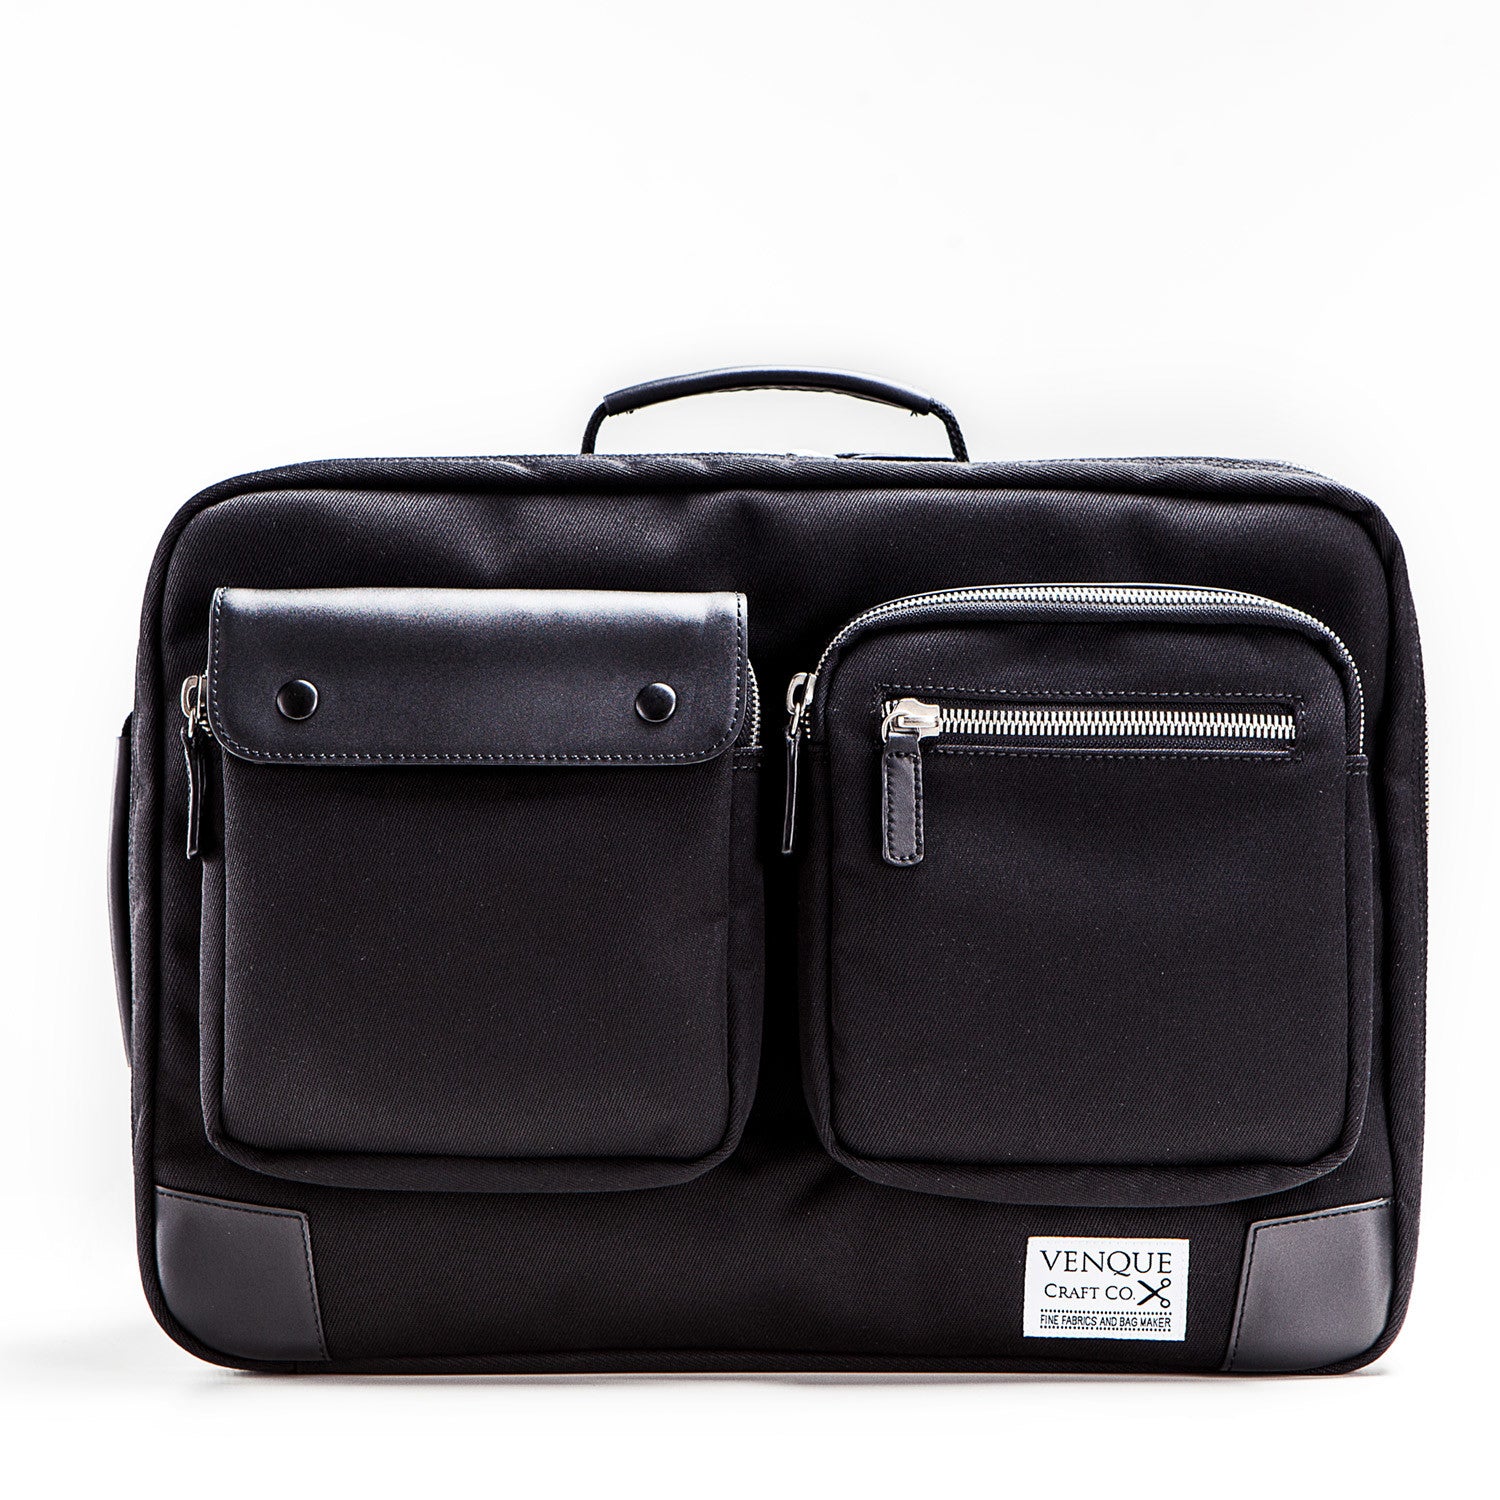 'Venque Briefpack XL' in 'Black' colour